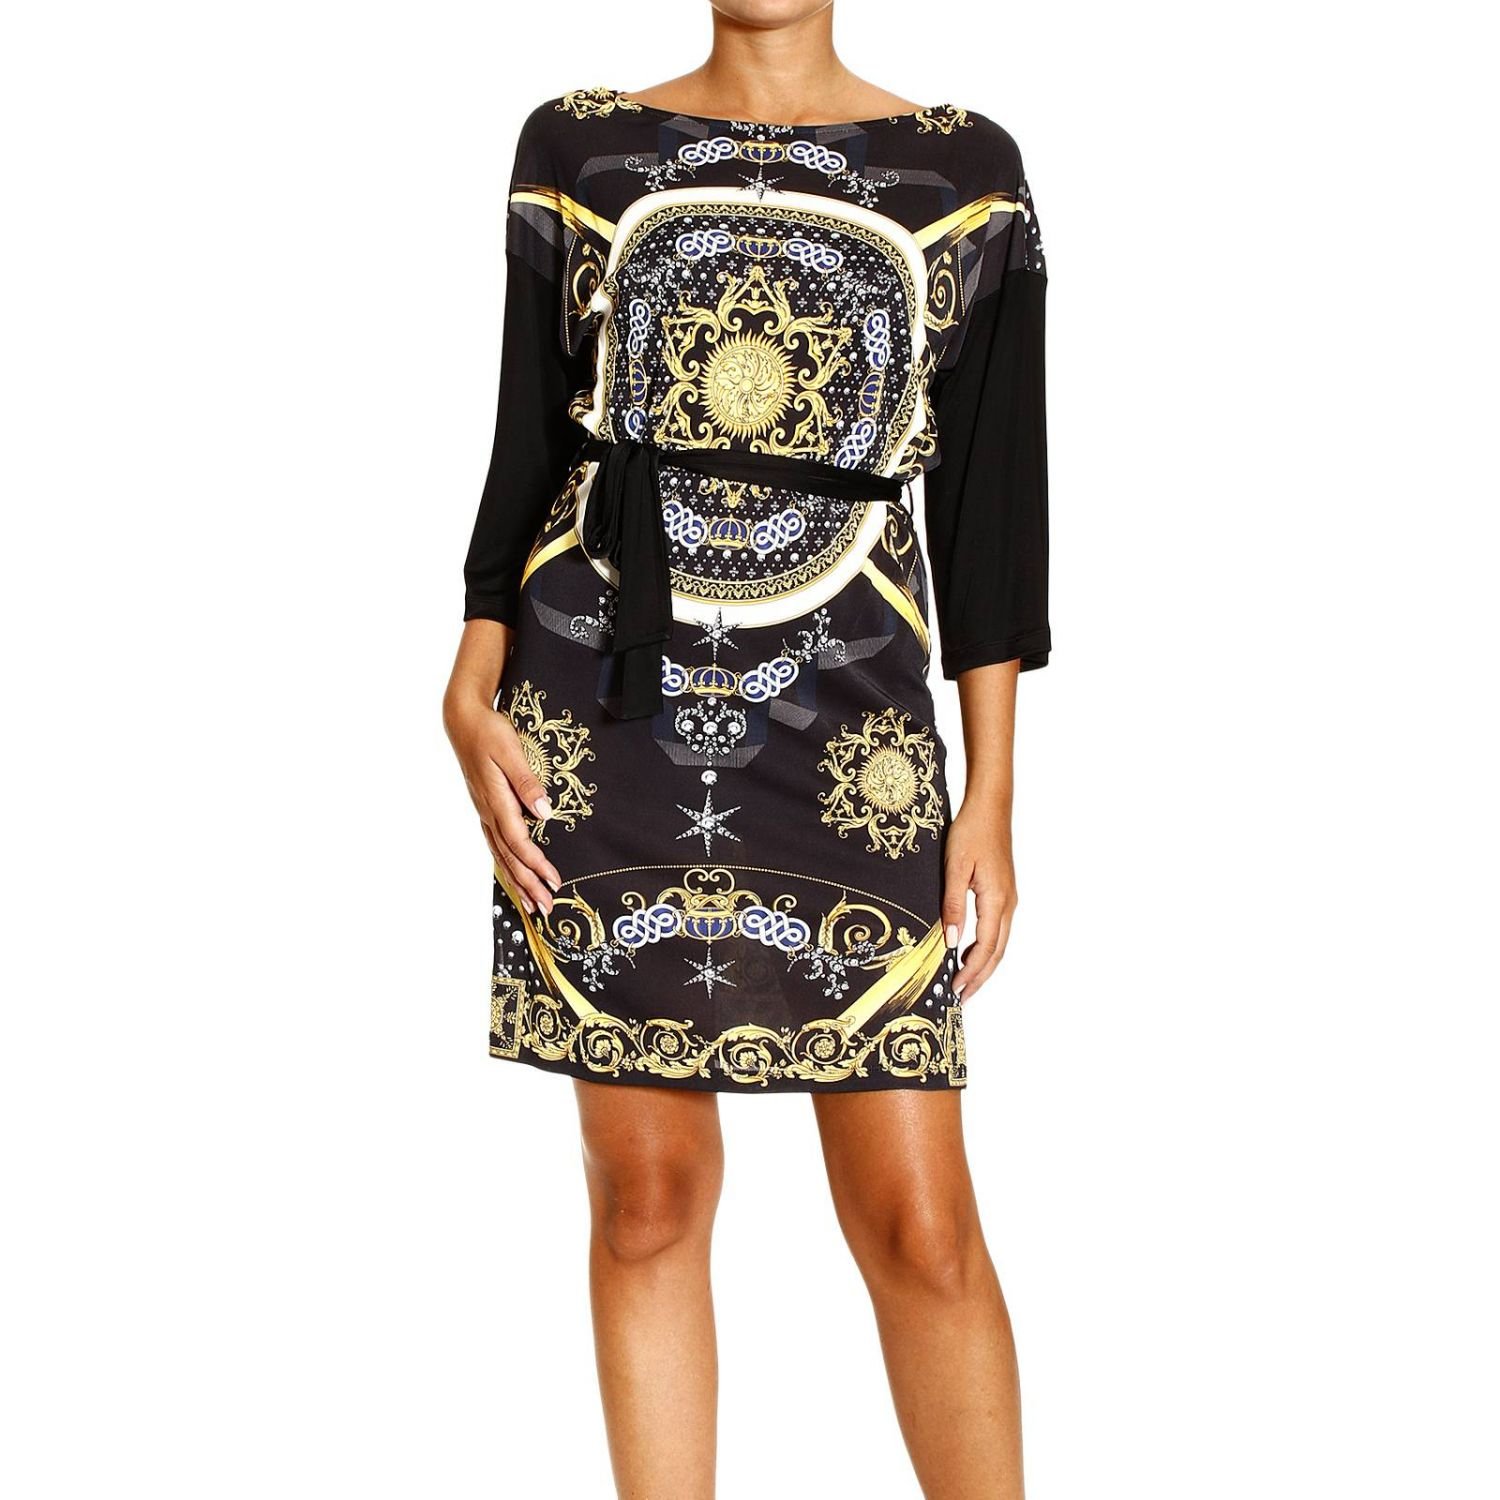 Versace collection. Рубашка Versace 122354. Джанни Версаче одежда. Джанни Версаче платья. Джанни Версаче стиль.